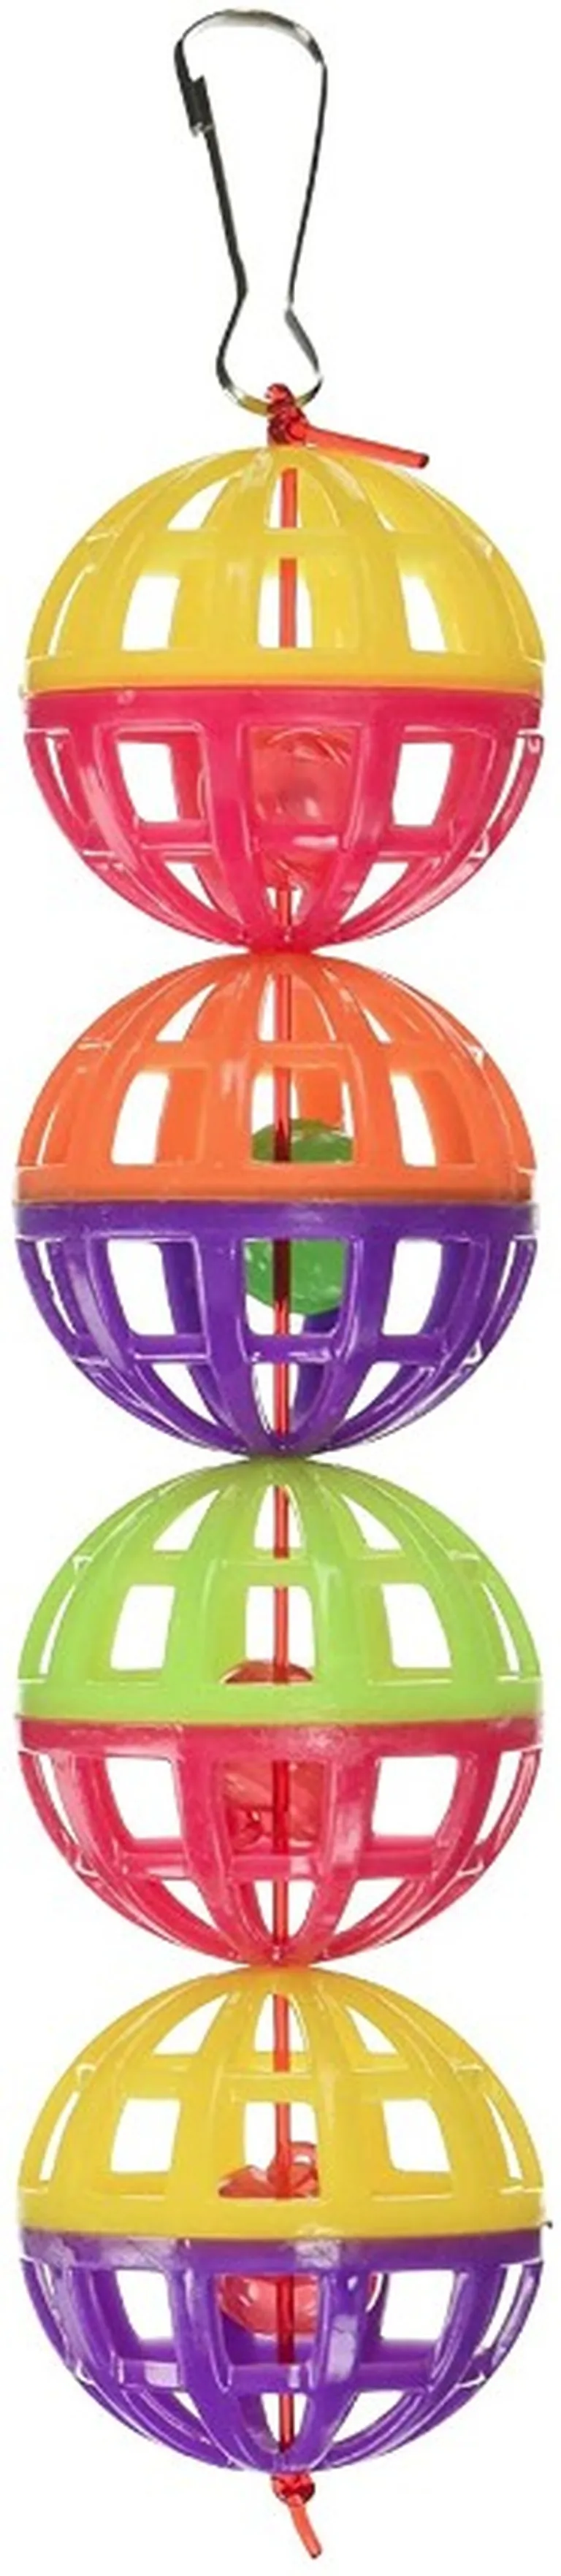 Penn Plax Lattice Ball Toy with Bells Photo 2